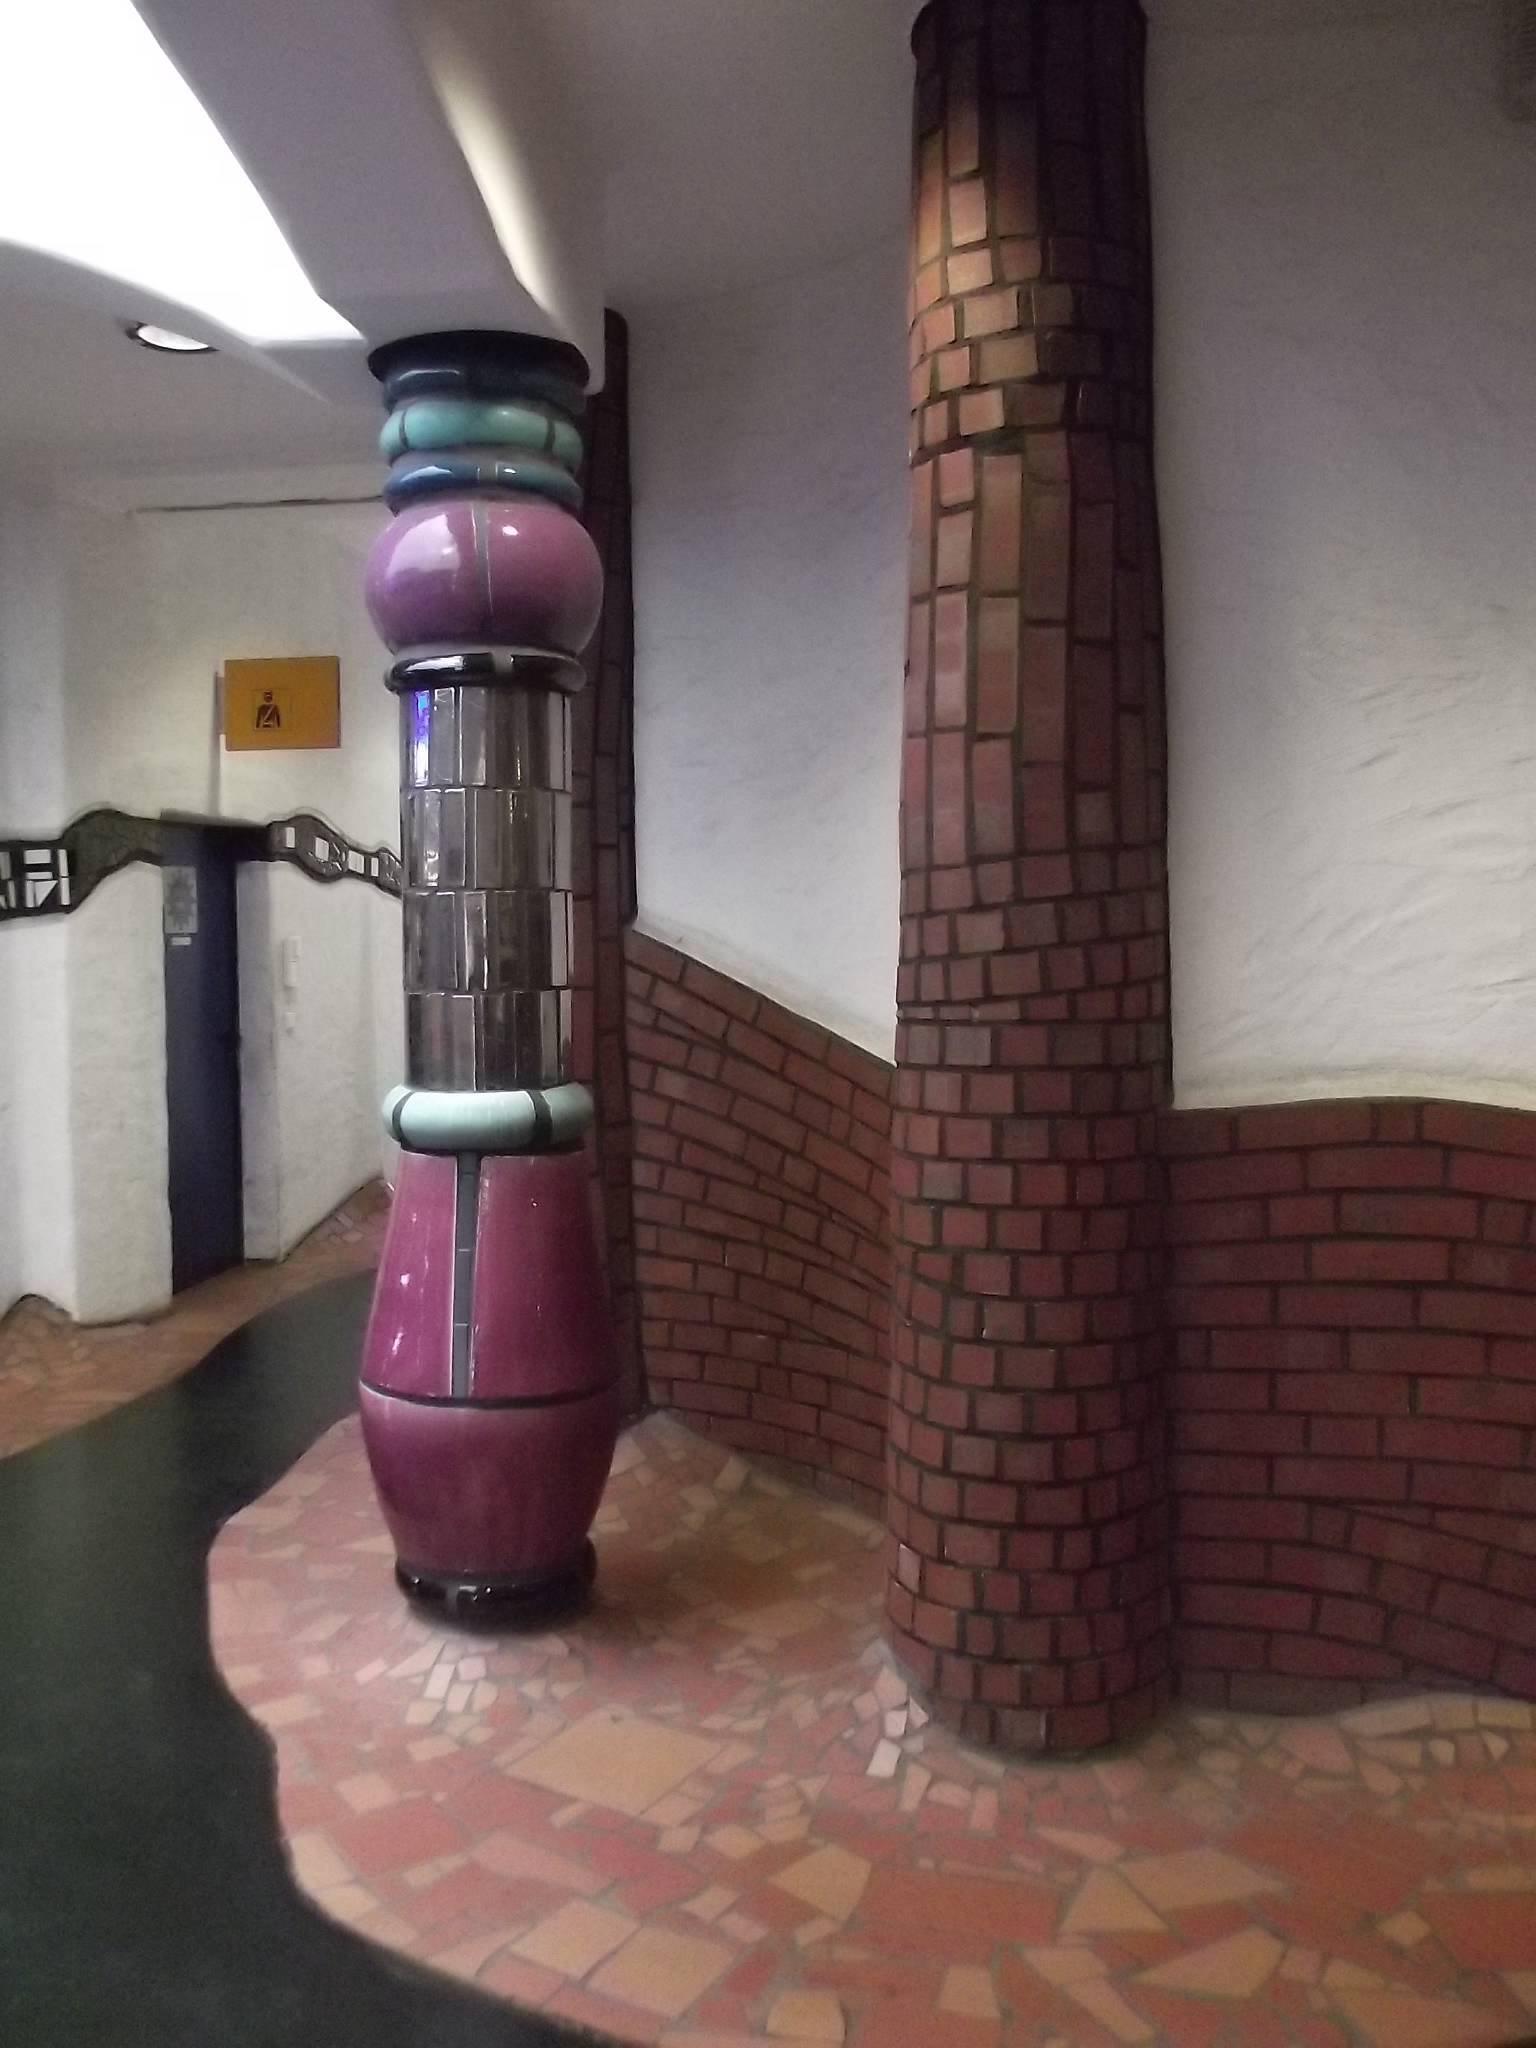 Hundertwasserbahnhof in Uelzen Expo Projekt 2000 - Überall sind die bunten Säulen